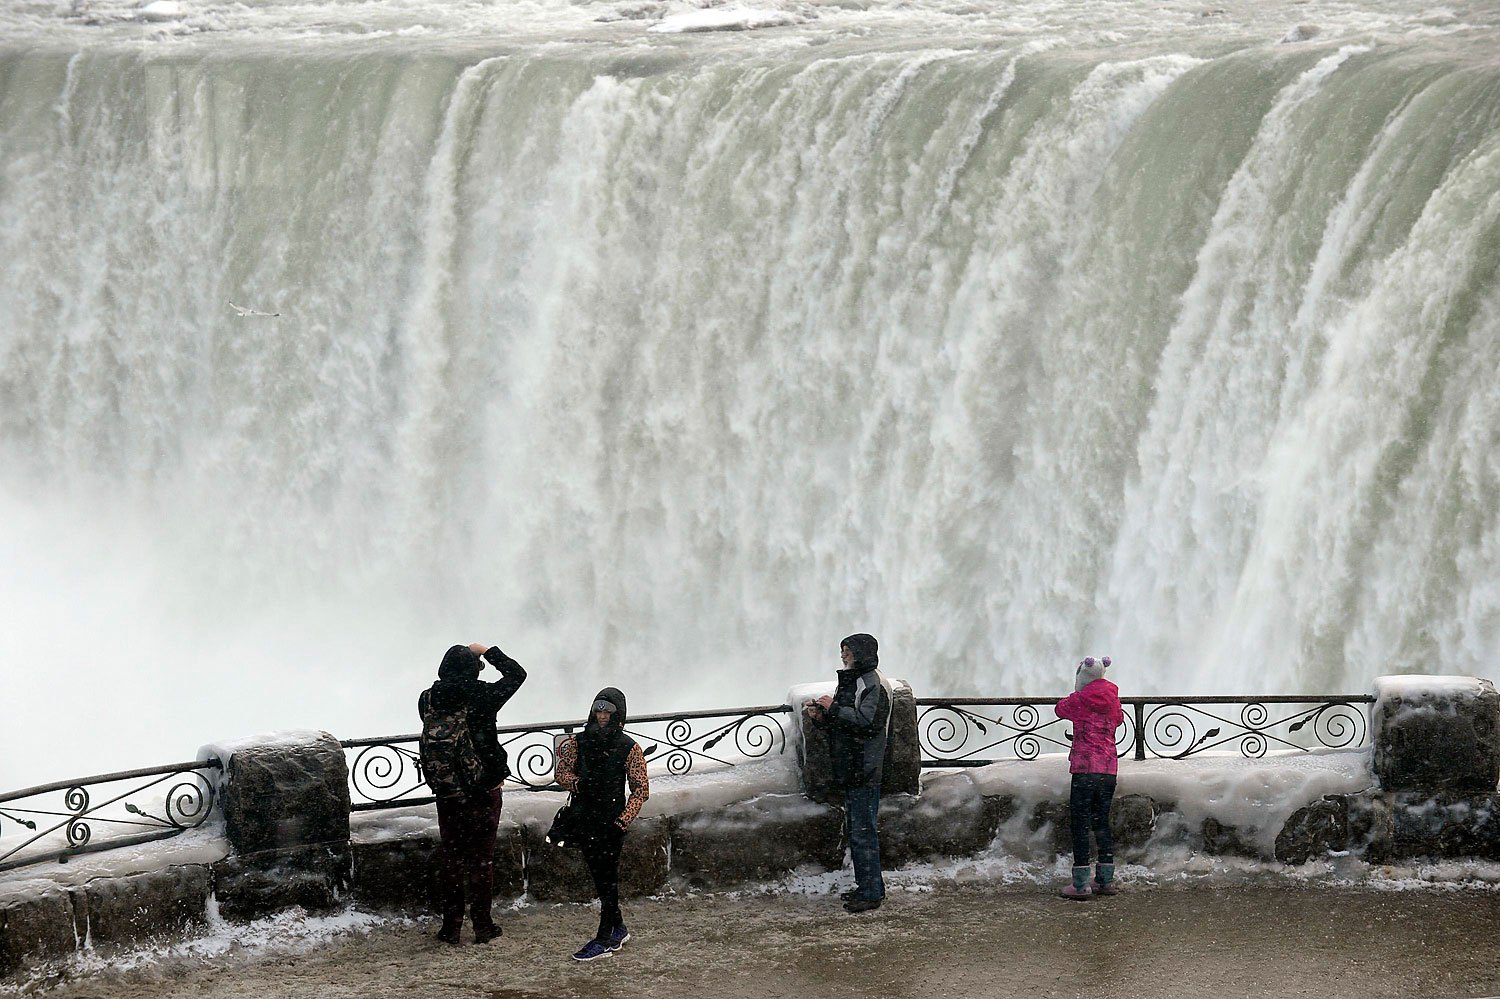 Visitors take pictures overlooking the falls in Niagara Falls, Ontario, Jan. 8, 2014.